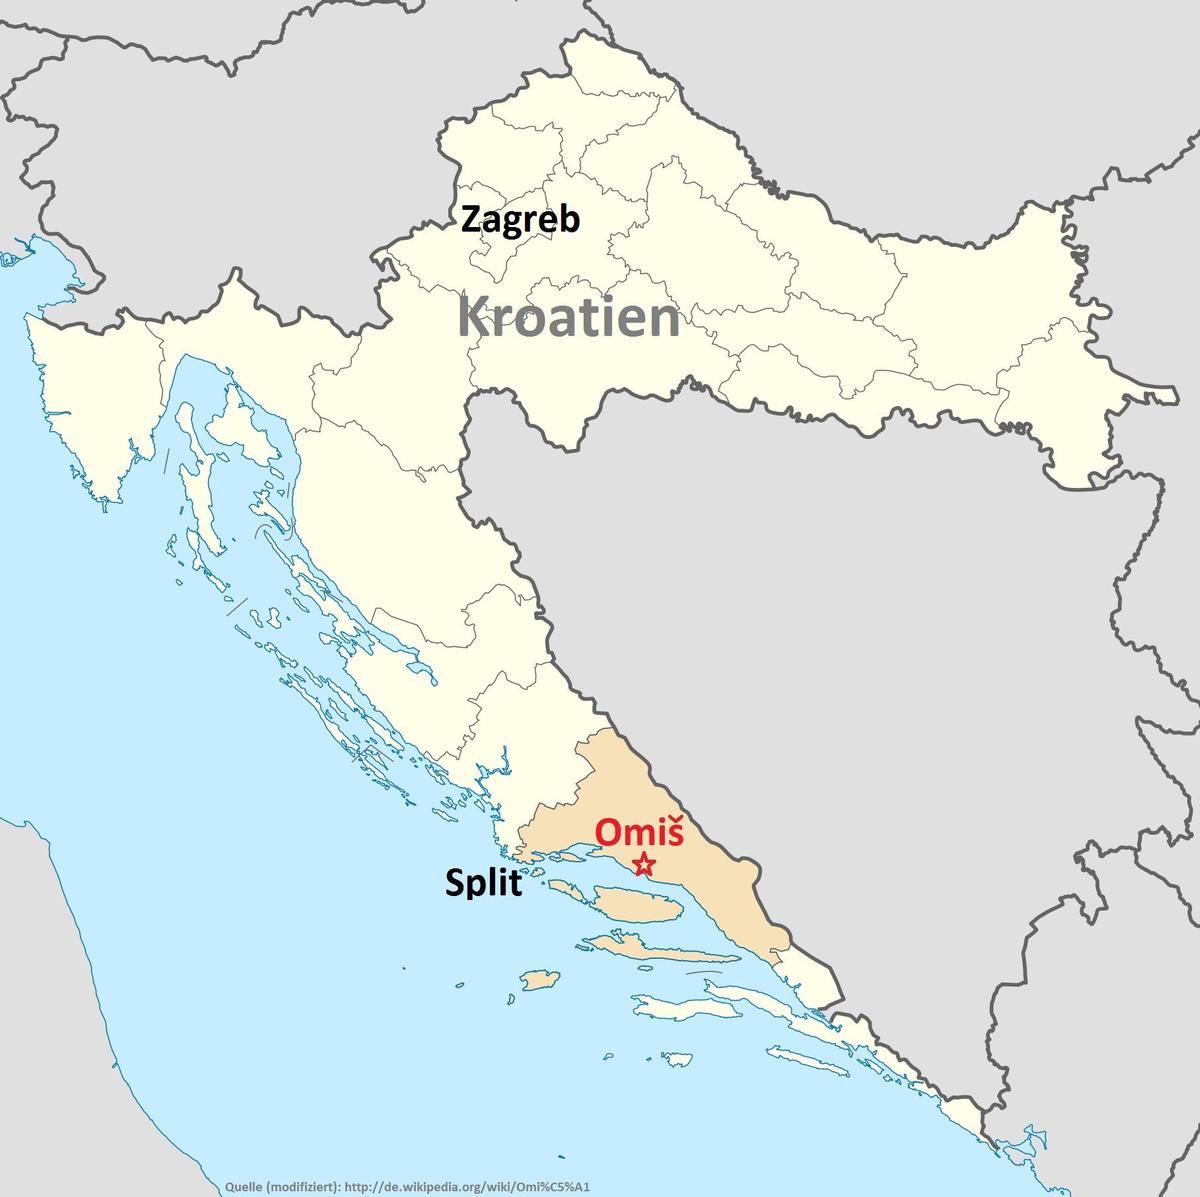 Abb. 1: Geografische Lage der Baumaßnahme Omiš/Kroatien 